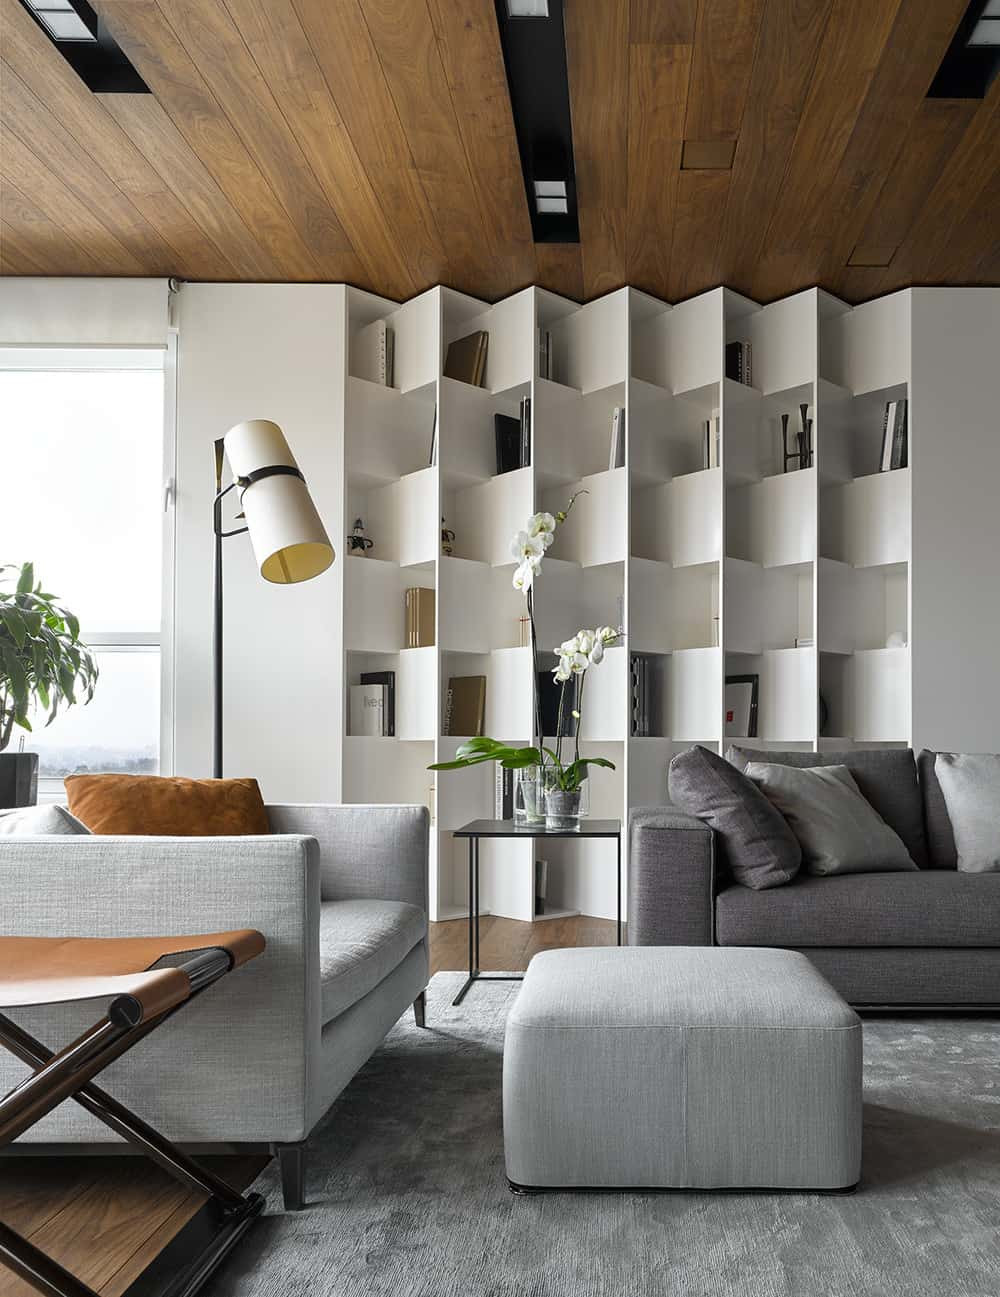 Living Room Storage Ideas
 Living Room Storage Ideas That Will Make Clutter Dissolve